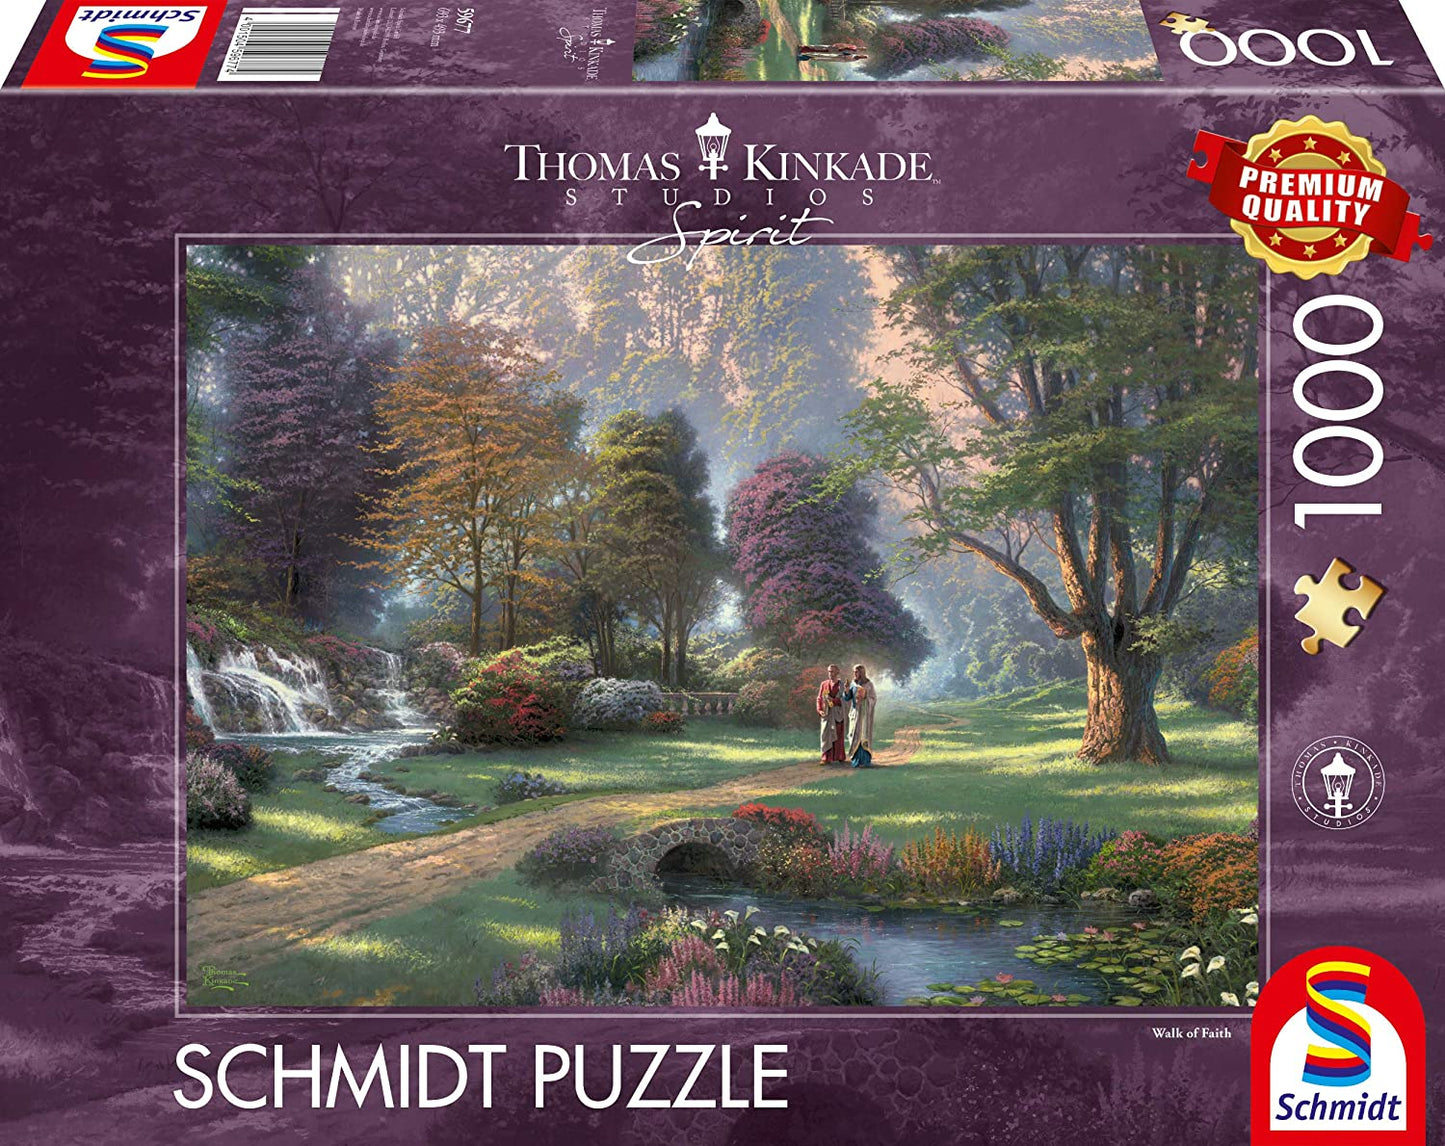 Schmidt - Thomas Kinkade, Spirit, Way of Faith - 1000 Piece Jigsaw Puzzle